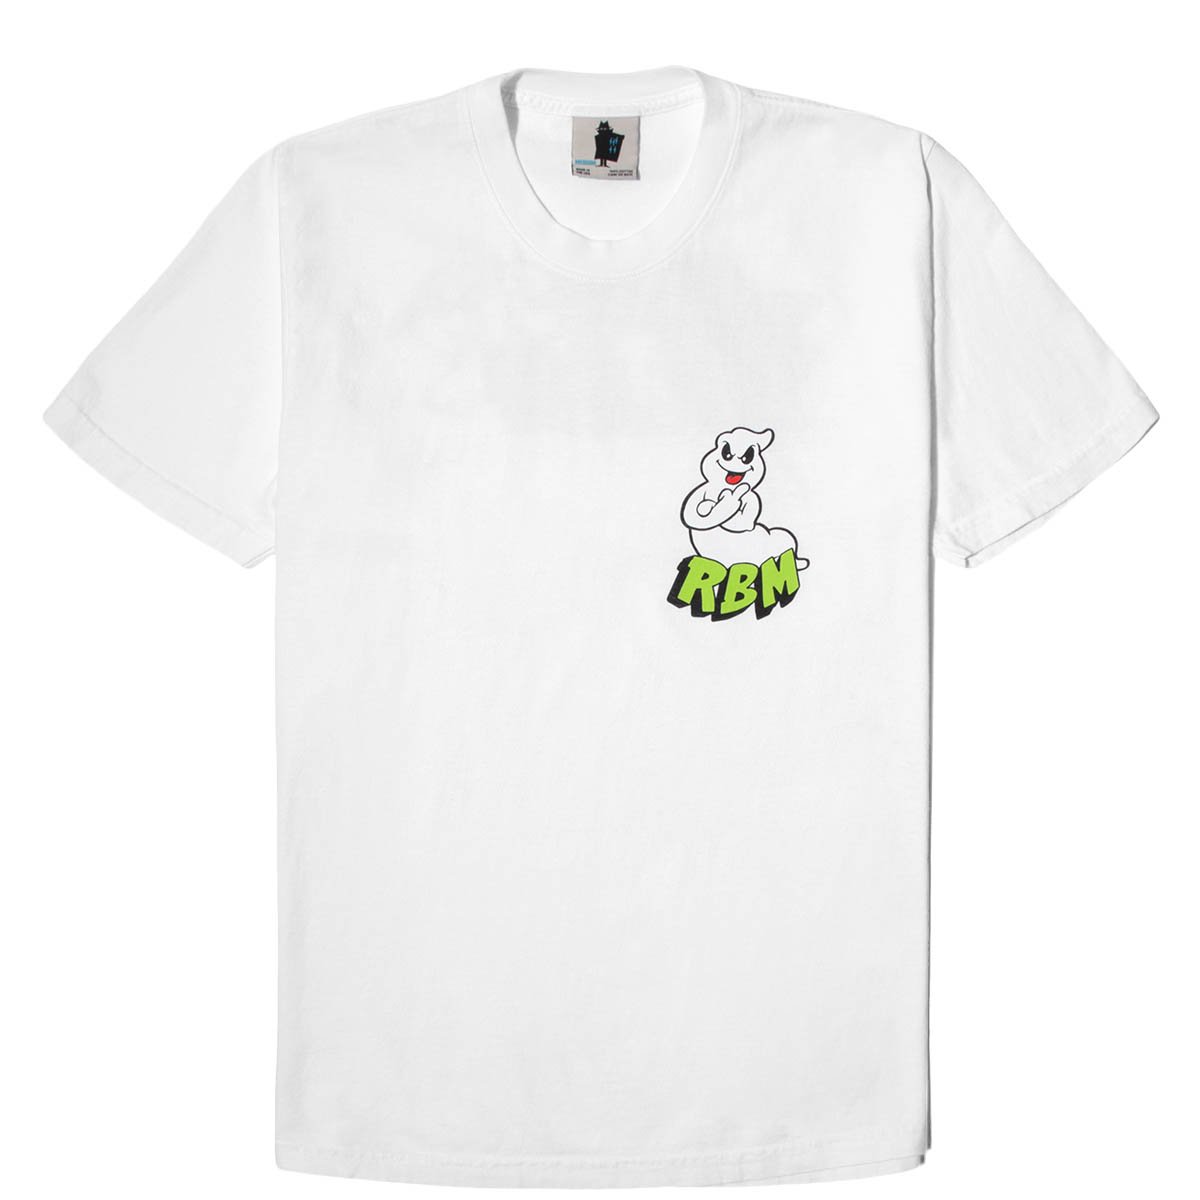 adidas ghost t shirt